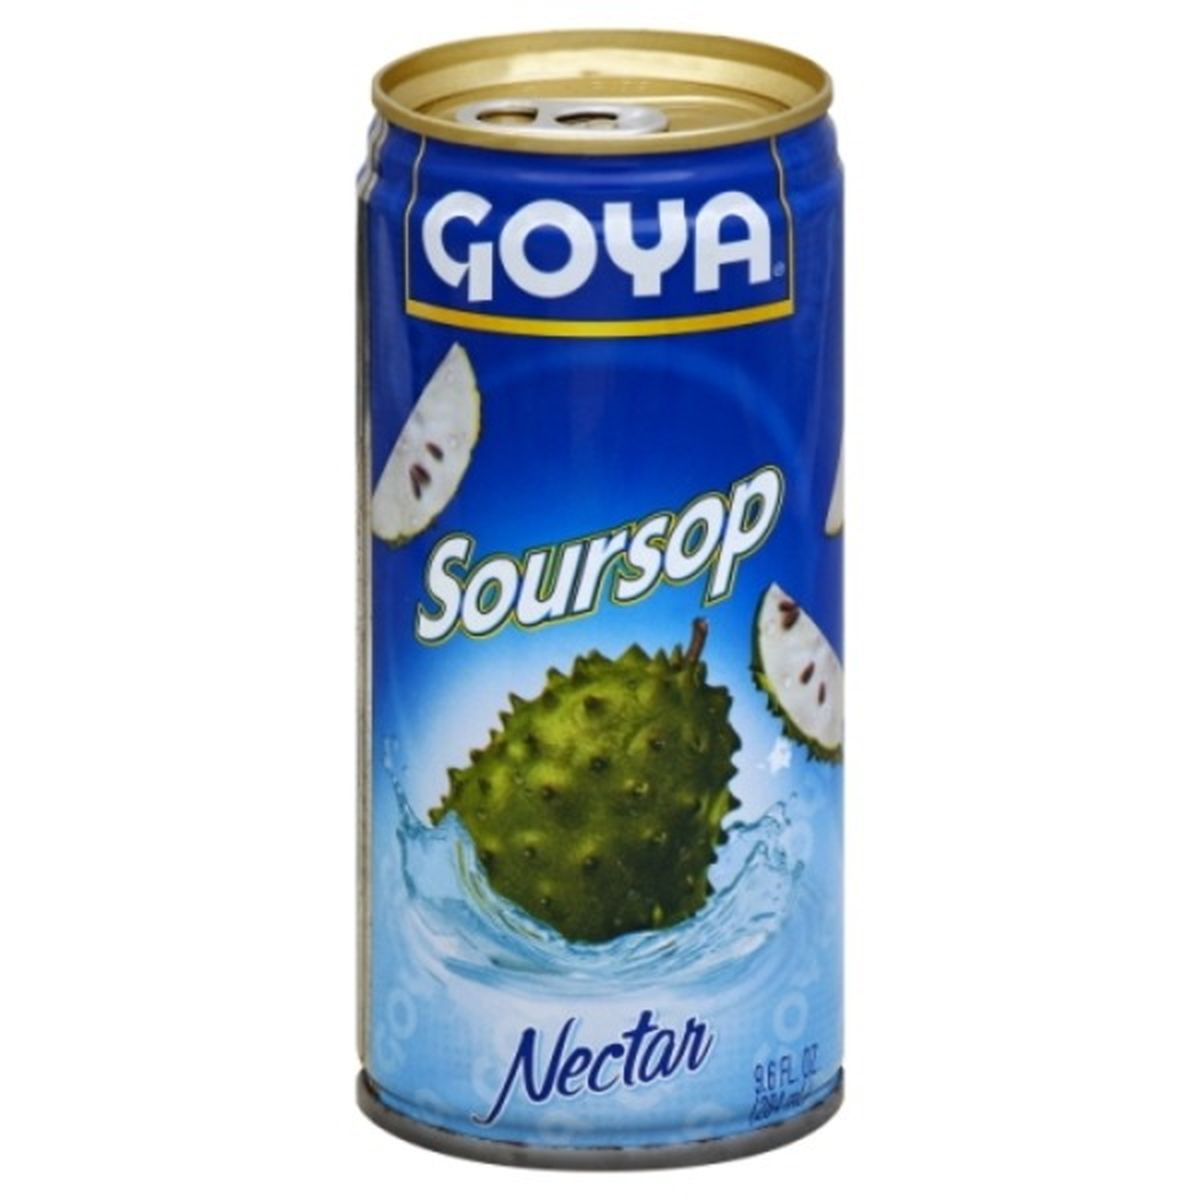 Calories in Goya Nectar, Soursop